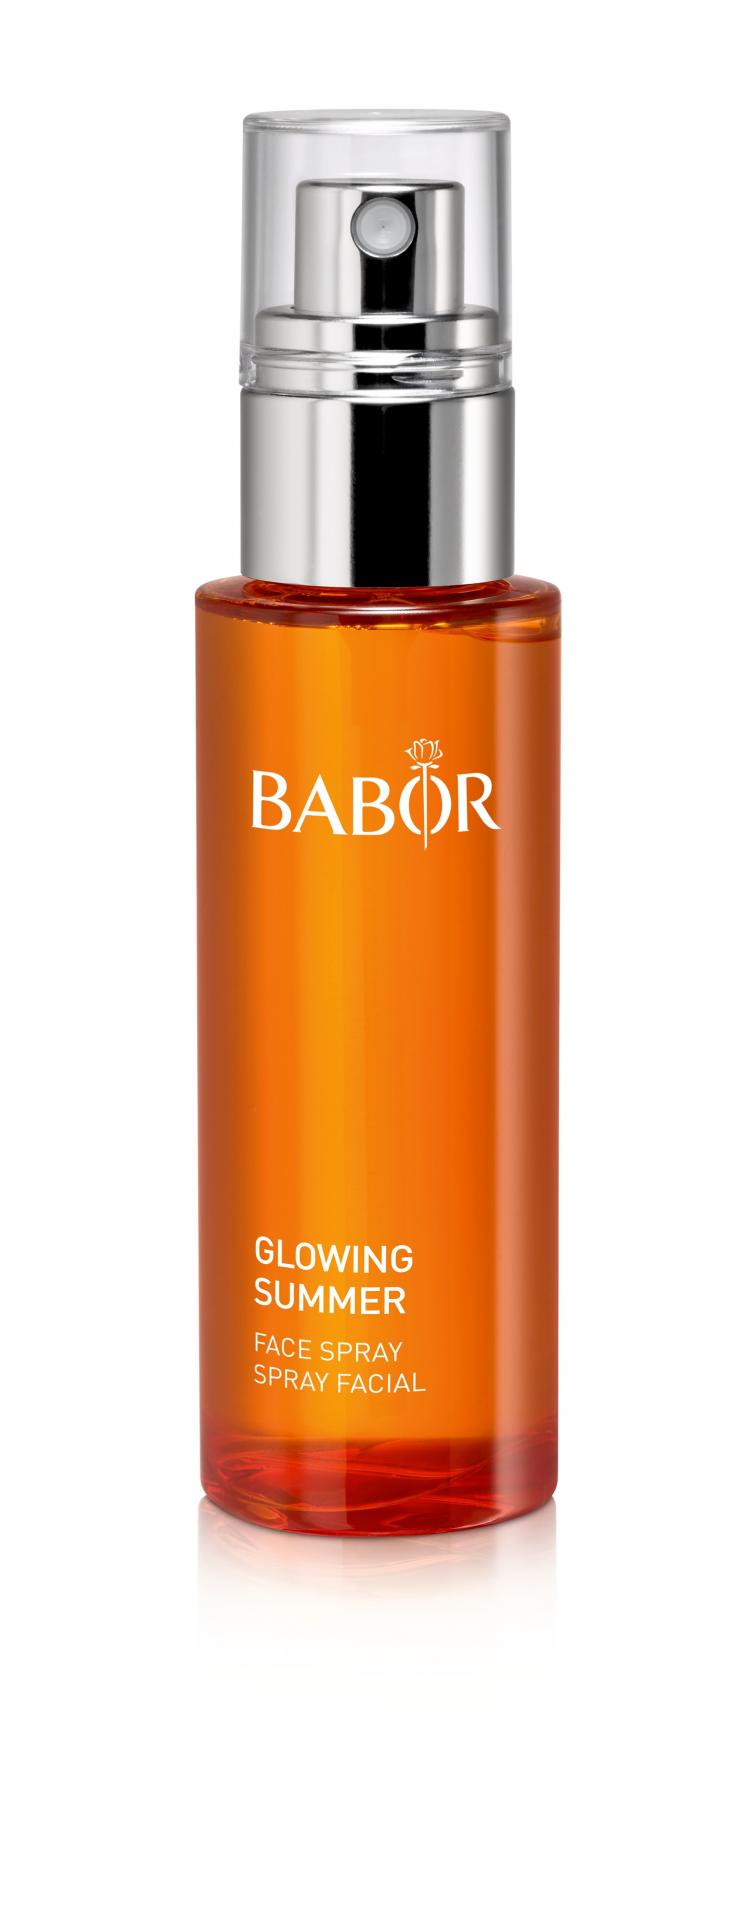 BABOR_Face-Spray-Glowing-Summer-2019.jpg